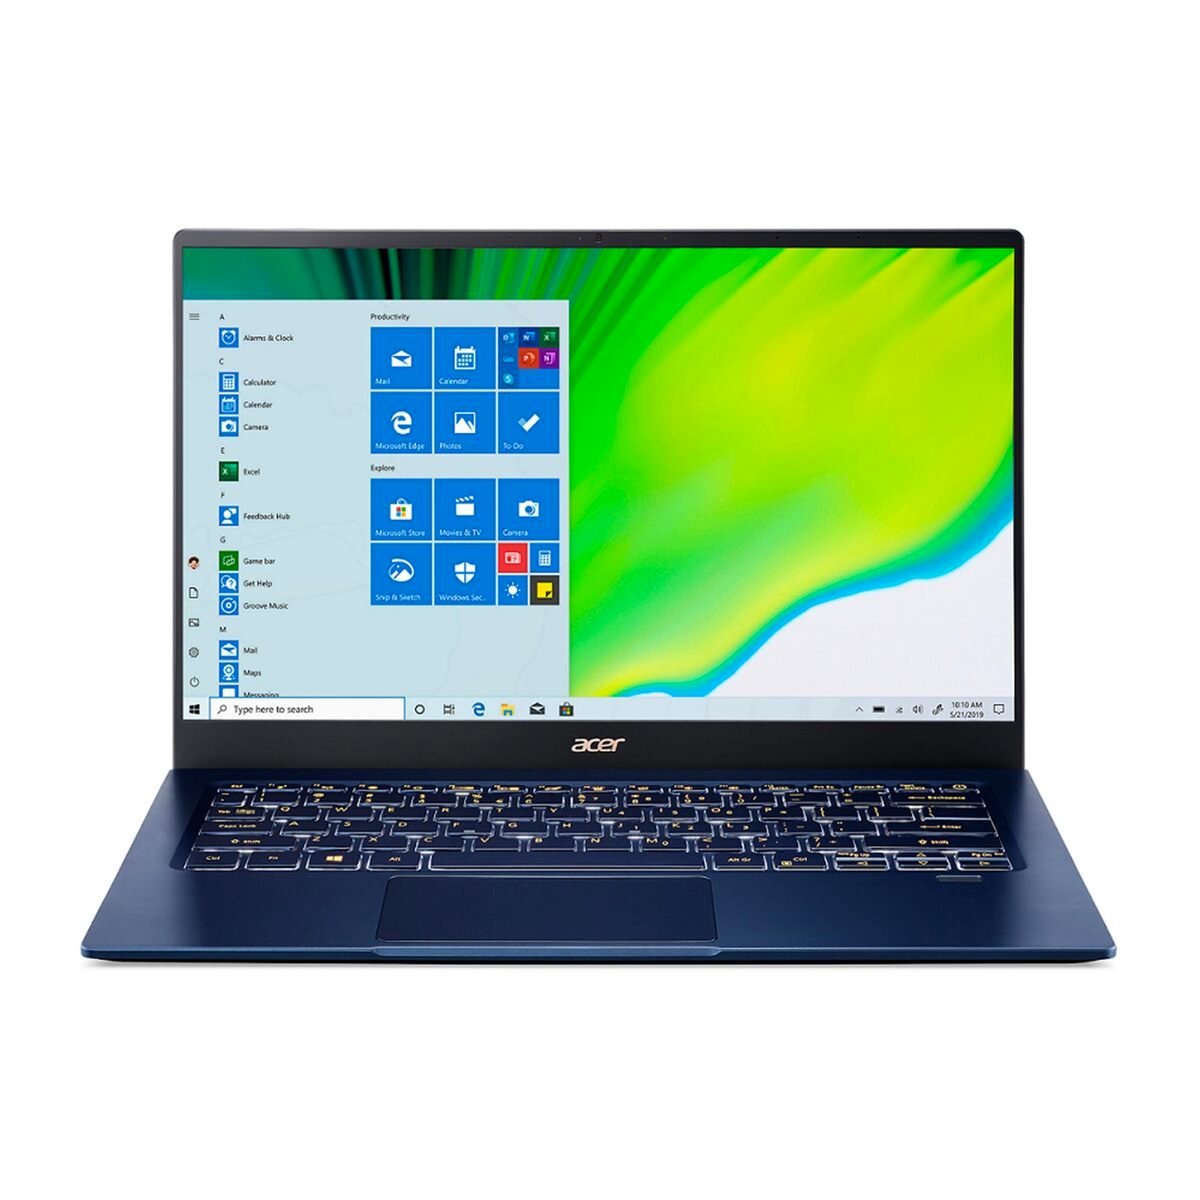 Acer Ultrabook SF514 NX.HHVEM.003, Intel Core i5-1035G1, 8GB RAM, 512GB SSD, 2GB Nvidia GeForce MX250, 14"FHD LED Display, Windows 10 Pro, Blue